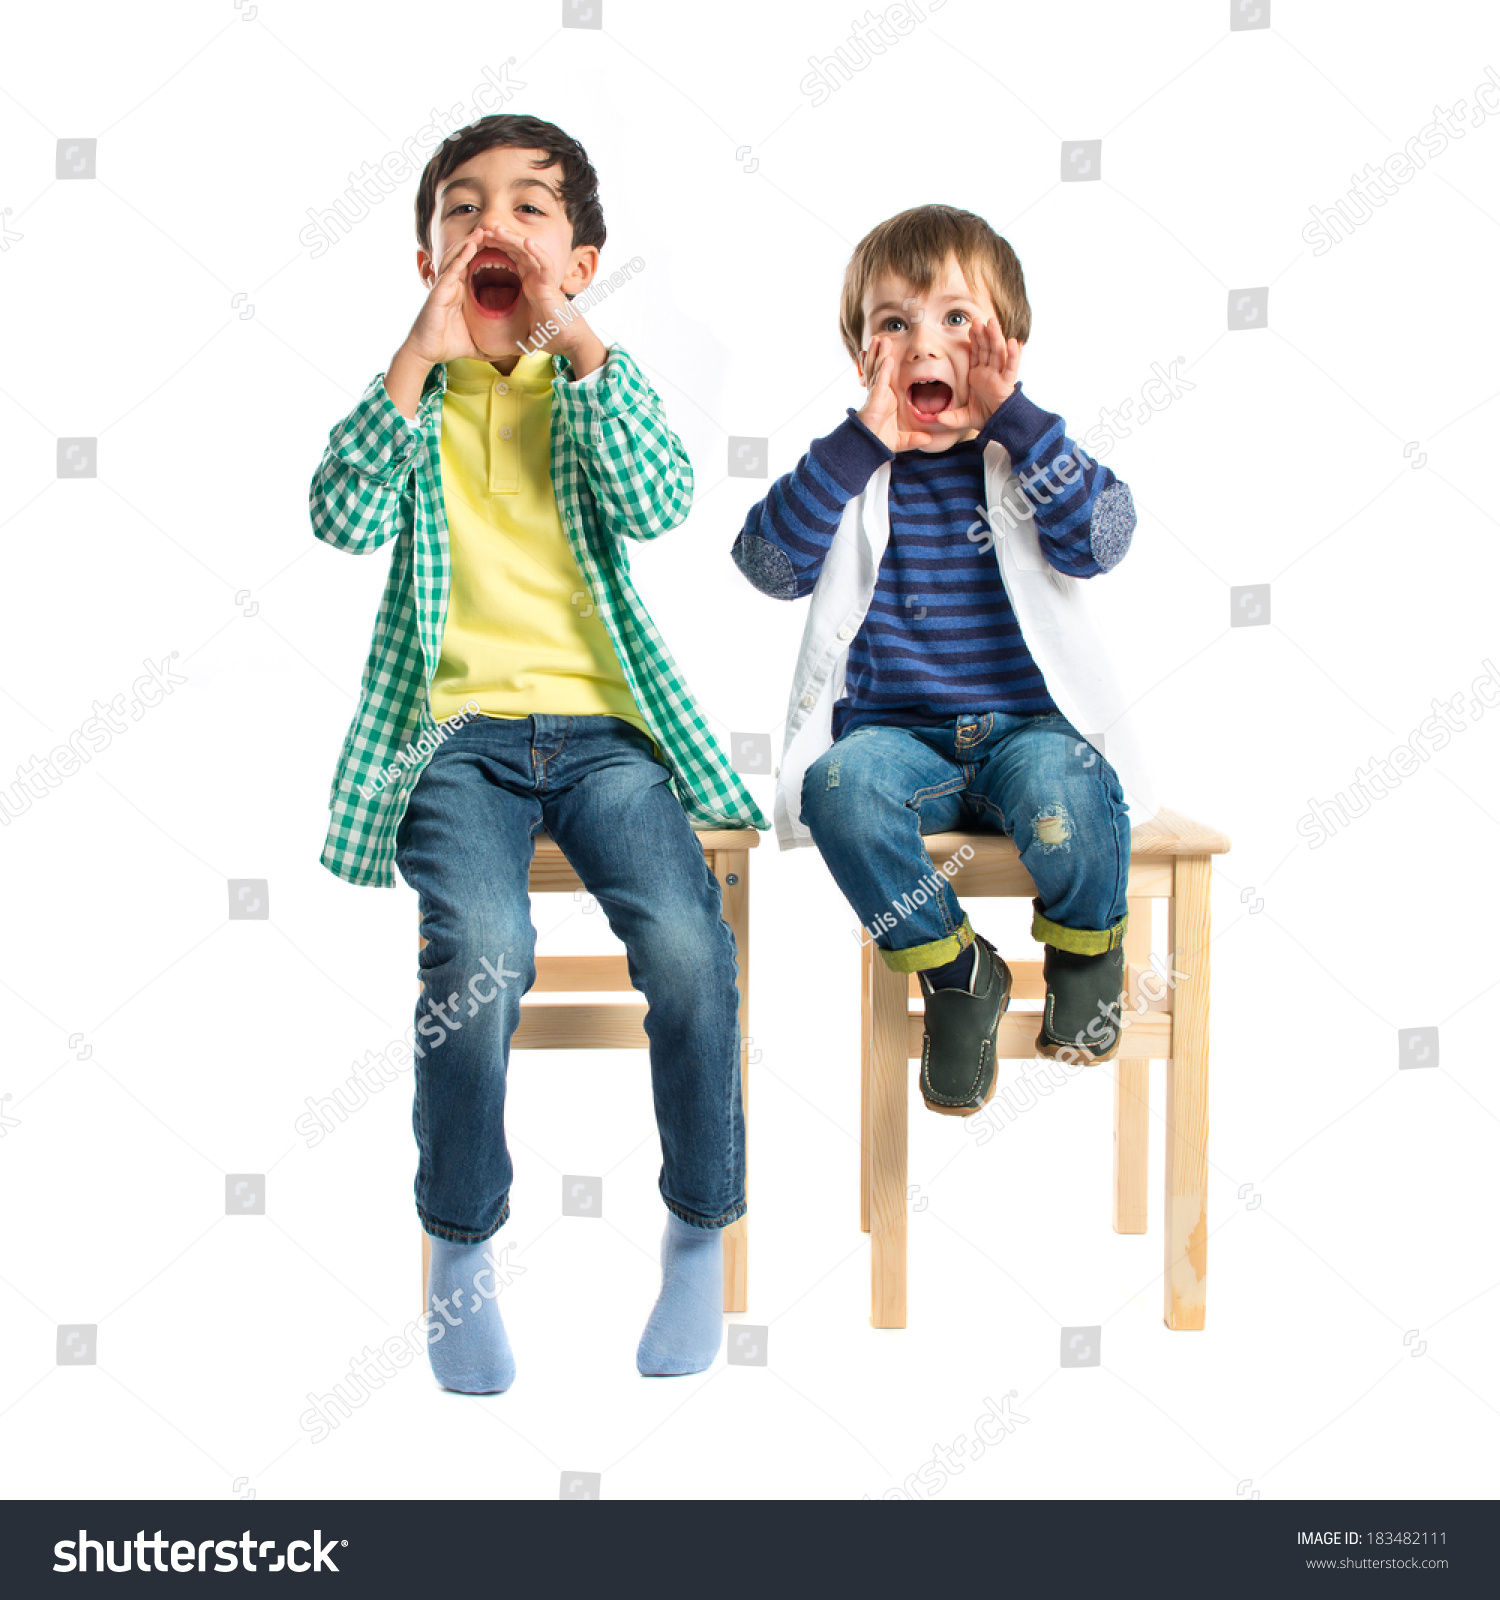 Kids Screaming Over White Background Stock Photo 183482111 | Shutterstock